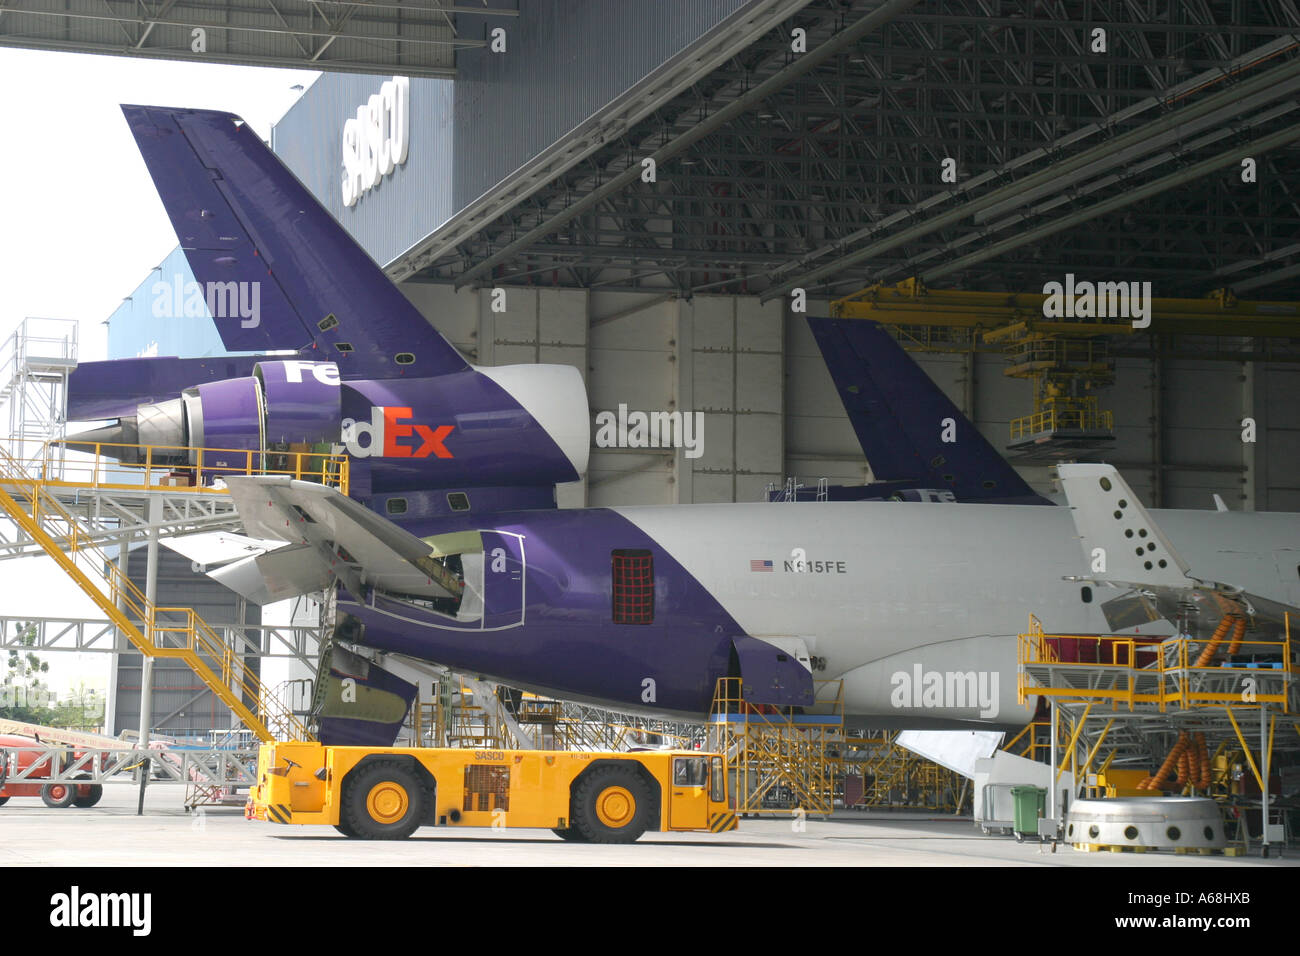 A FedEx cargo aircraft undergoes maintenance at a maintenance facility hangar at Changi Airport, Singapore. Stock Photo